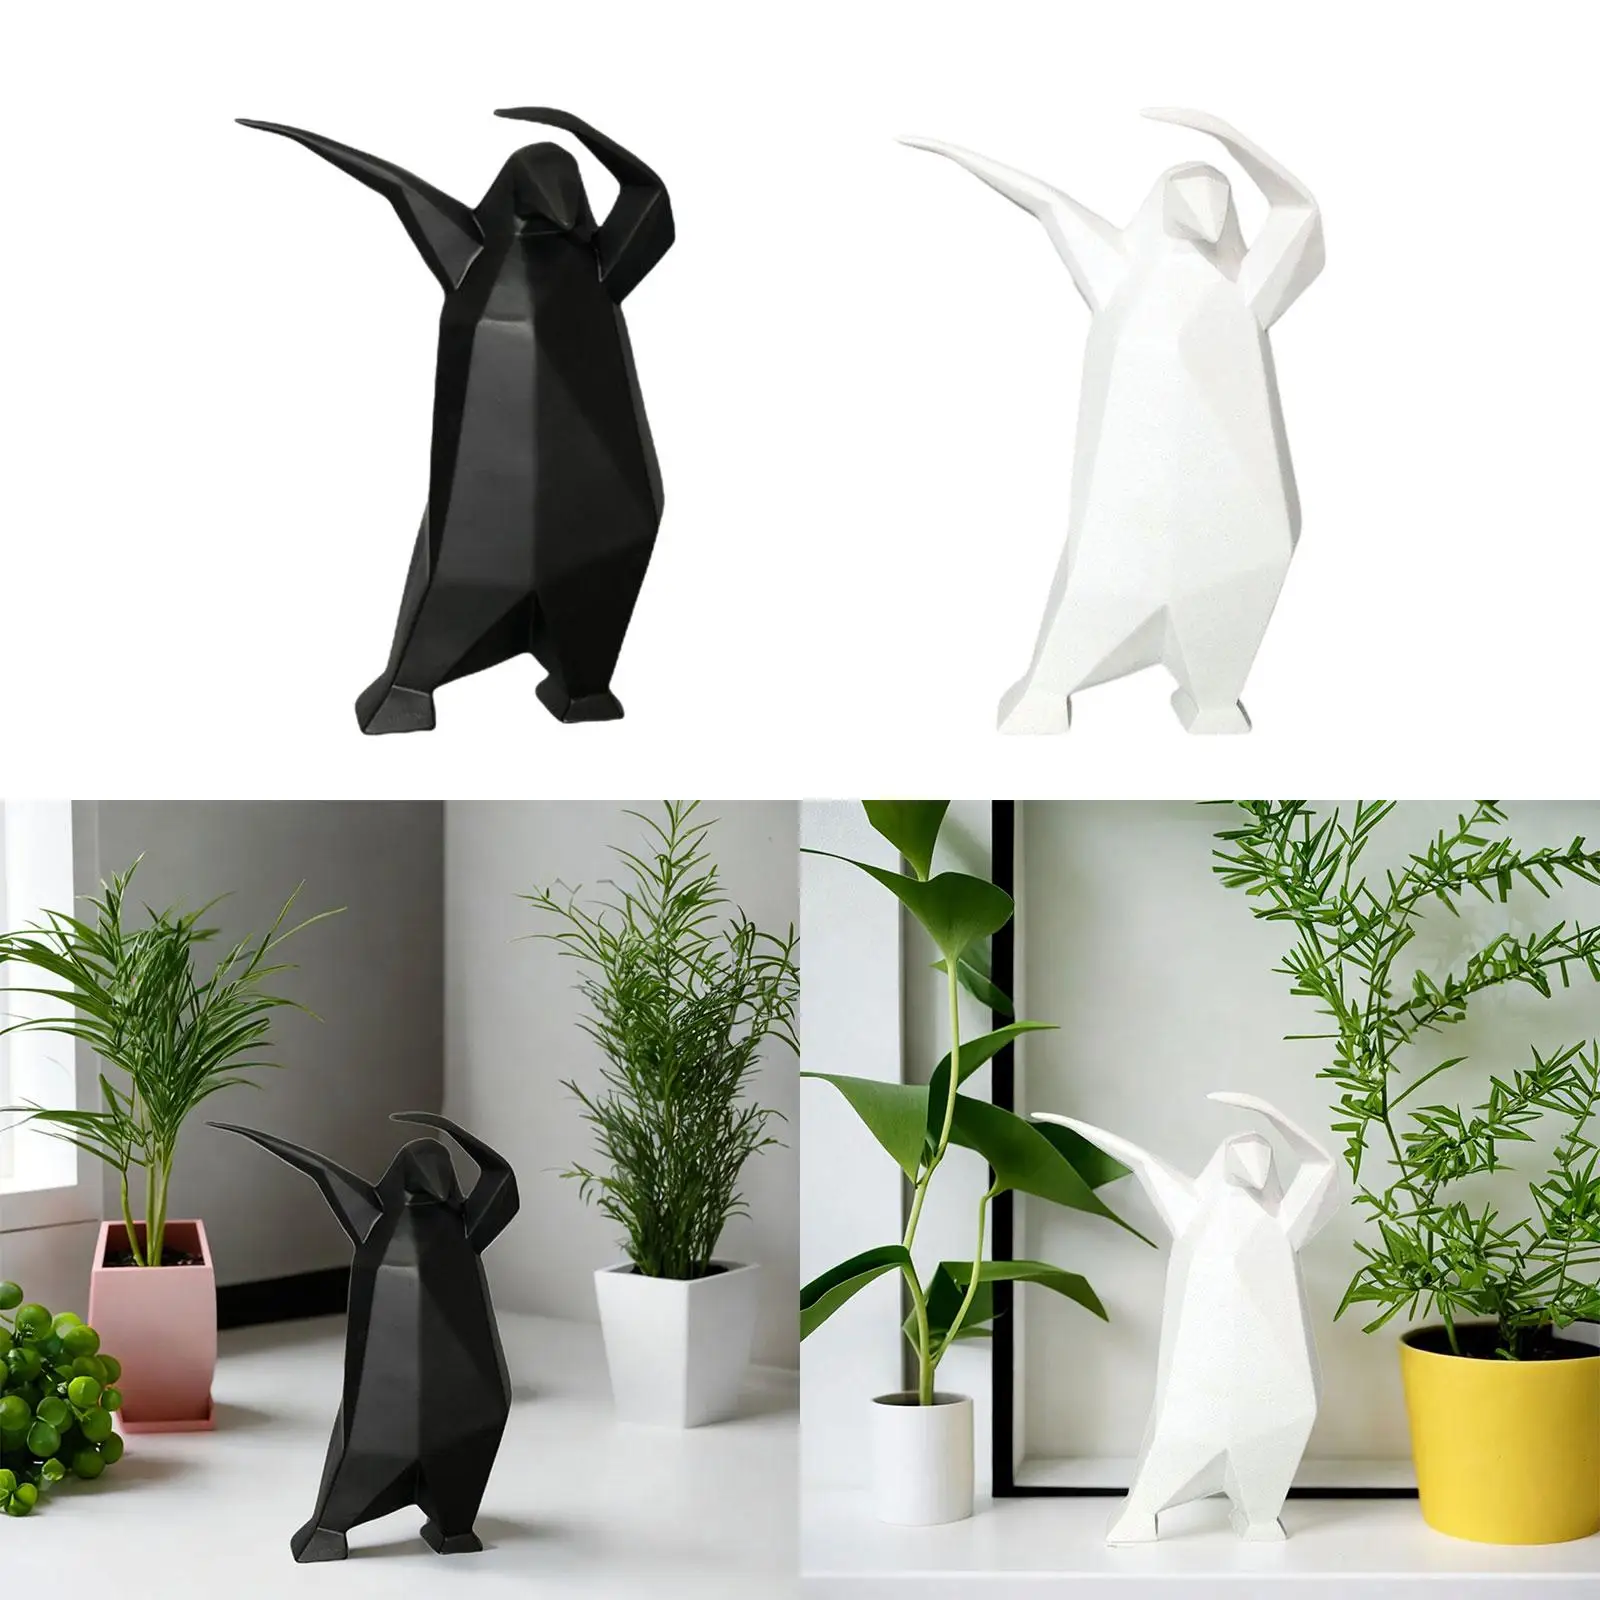 Penguin Sculpture Resin Figurine for Coffee Table Desktop Home Office